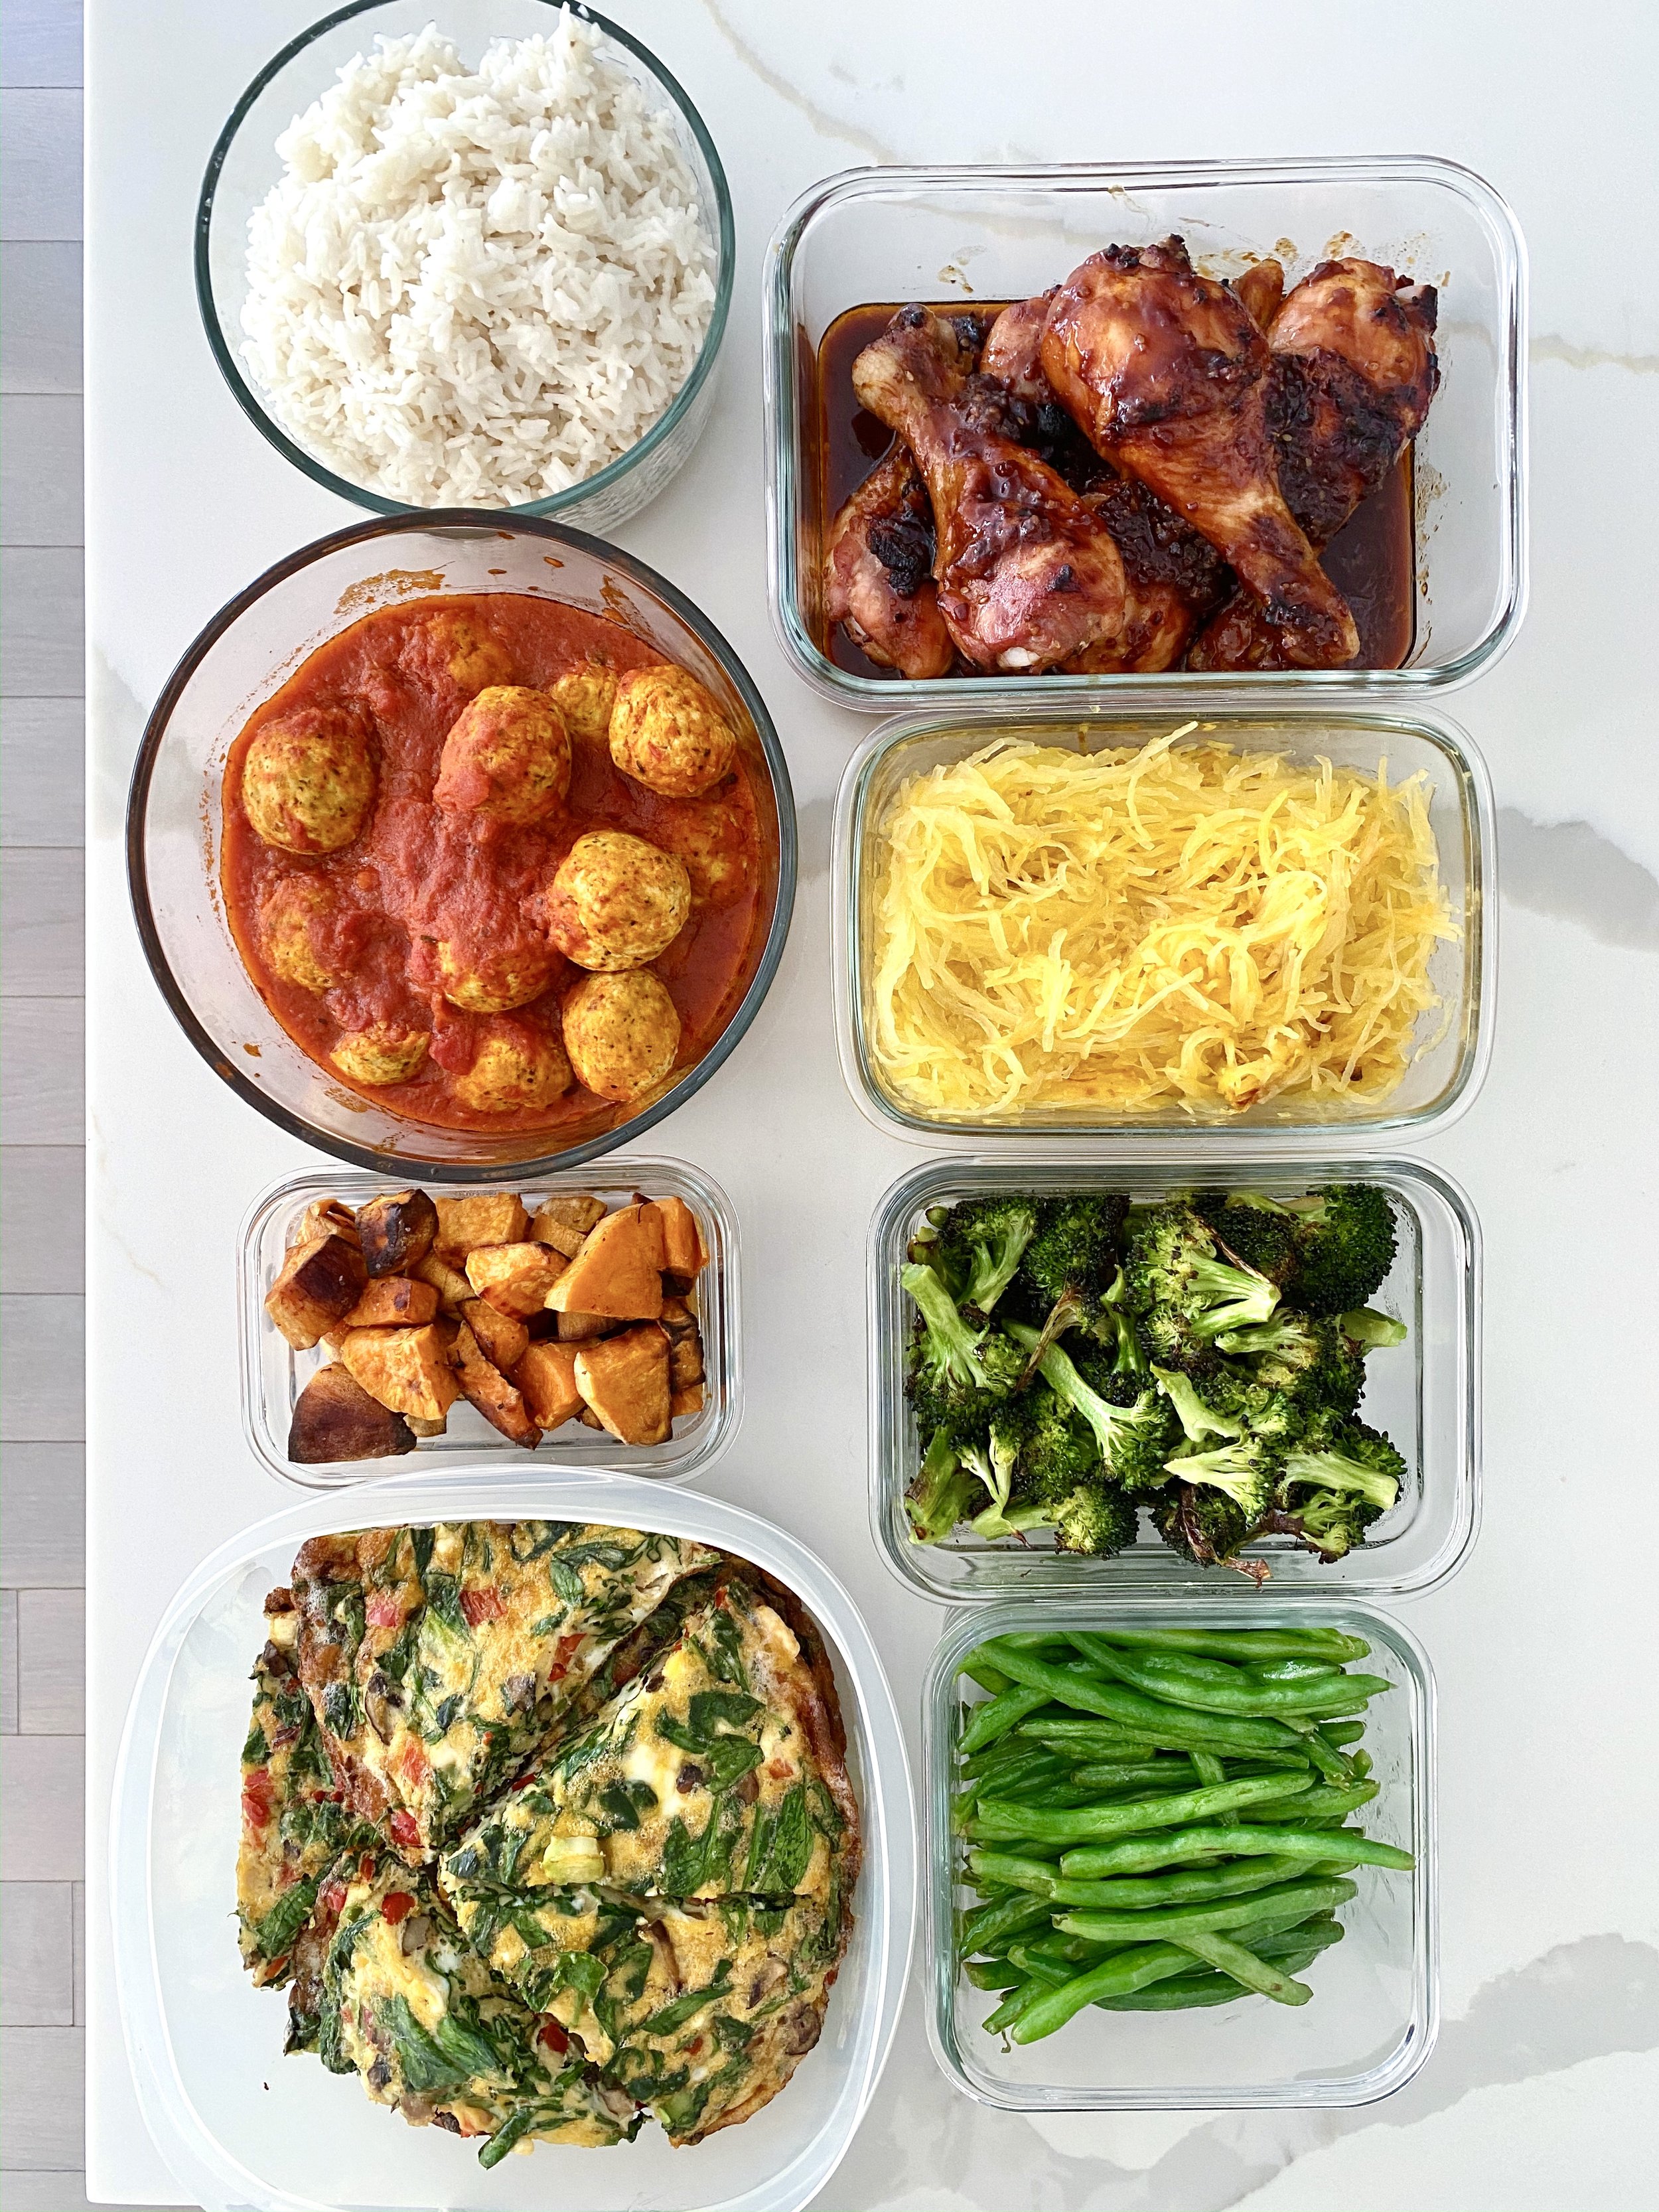 Meal prep goals 😍 thank you @Carolinecitelli #mealprep #foodprep #veg